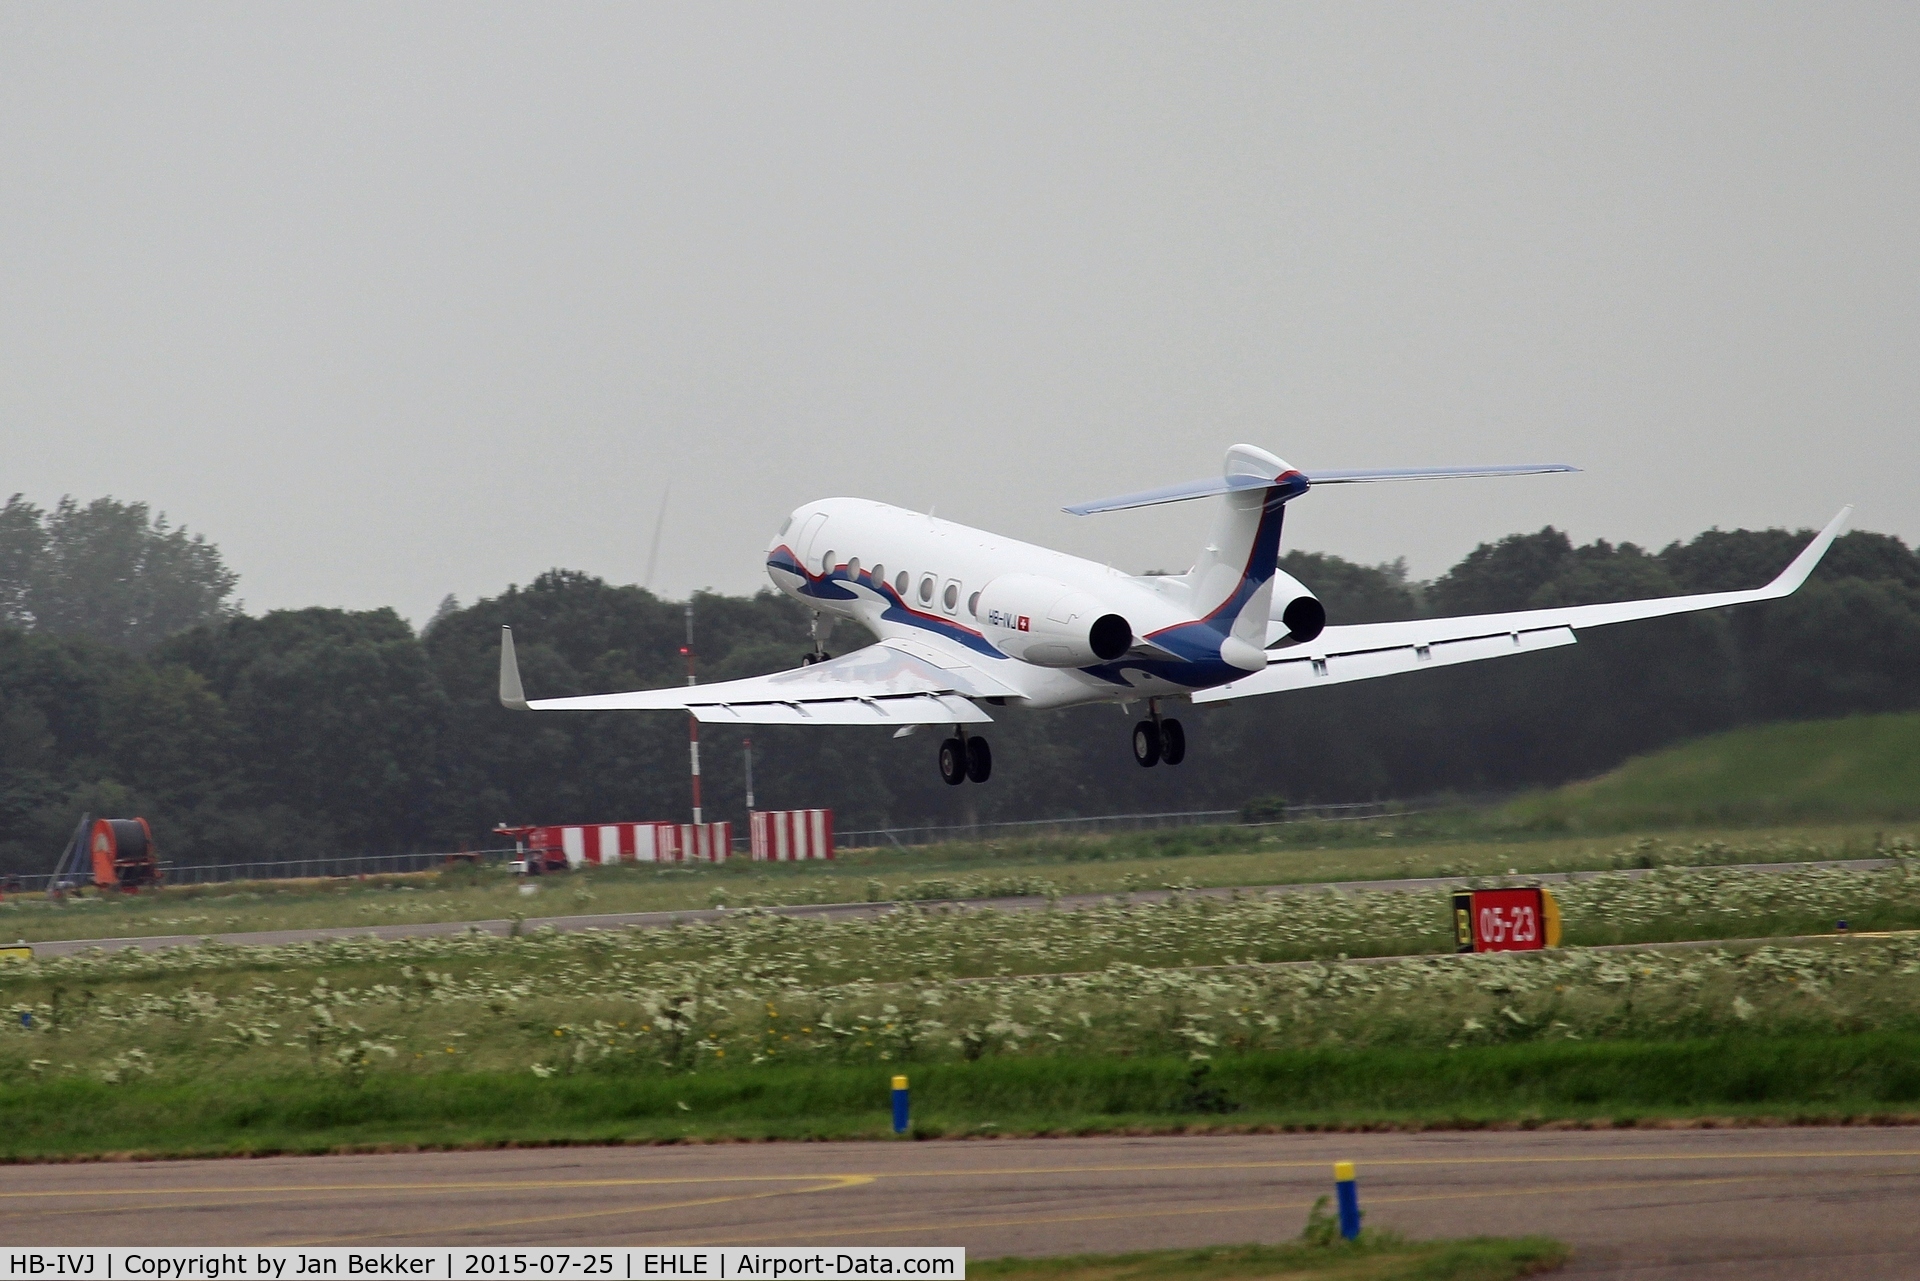 HB-IVJ, 2013 Gulfstream Aerospace G650 (G-VI) C/N 6062, Leaving Lelystad Airport in its new livery,